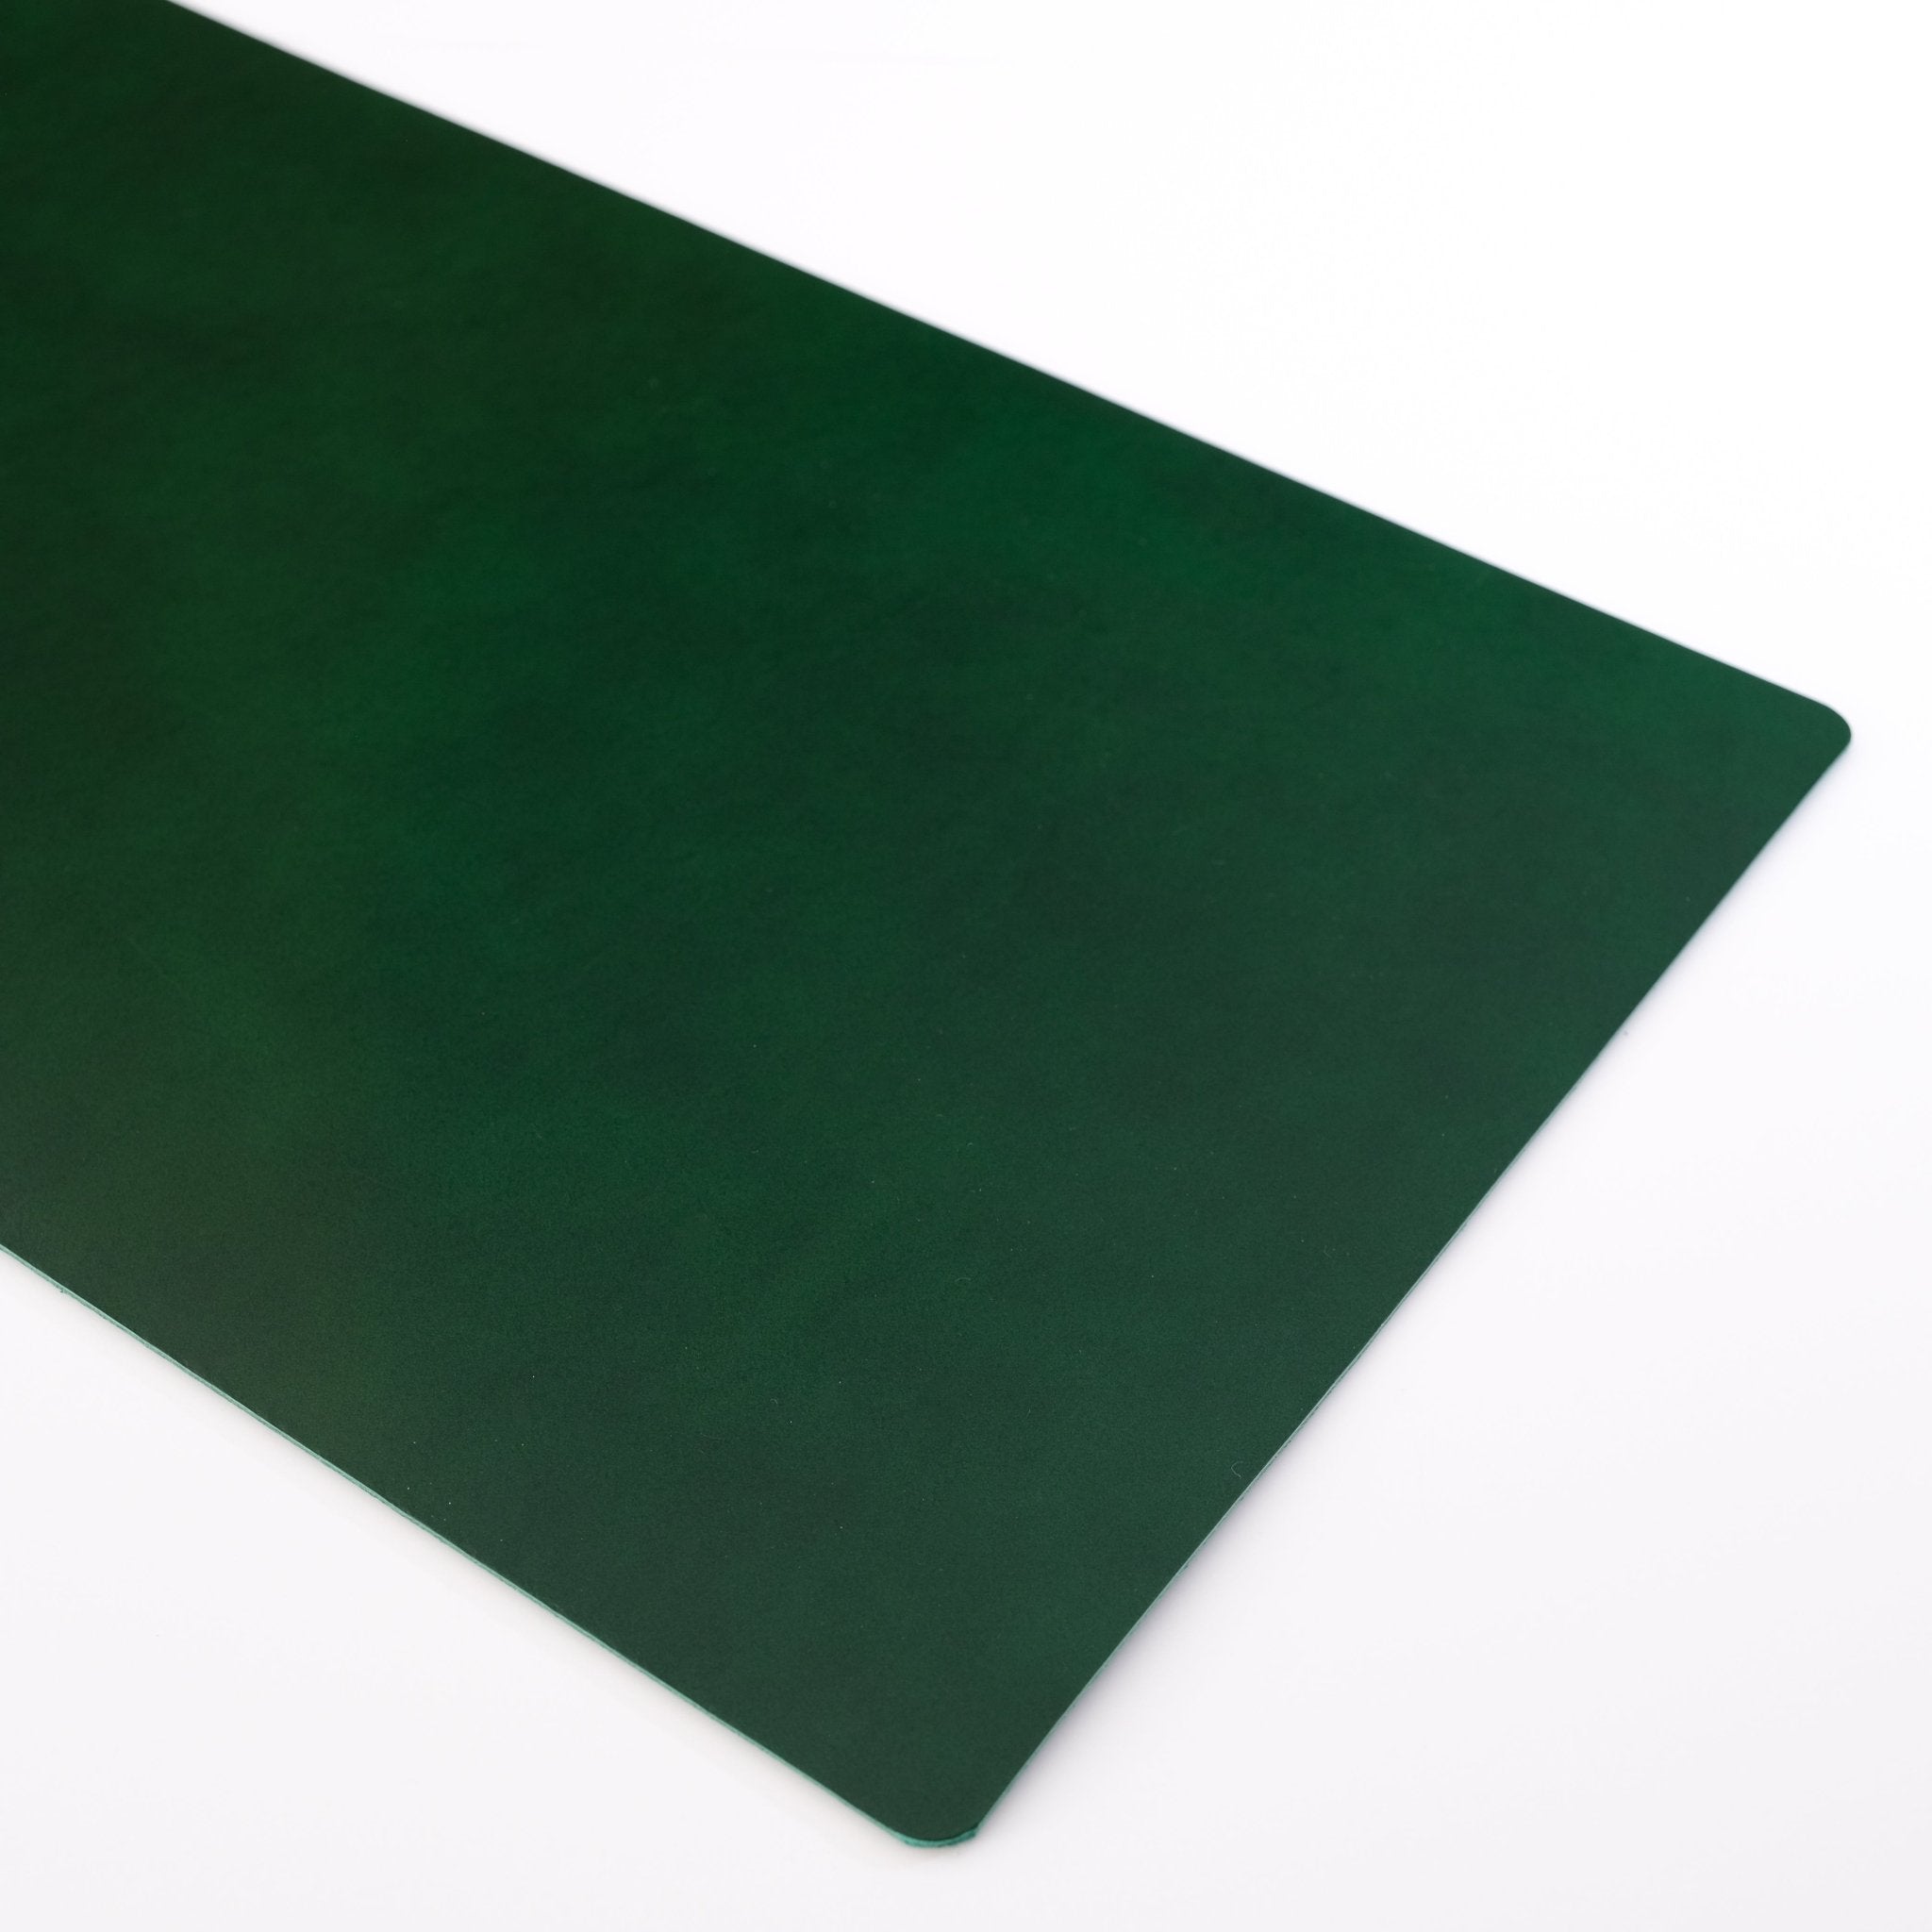 Emerald Leather Desk Mat